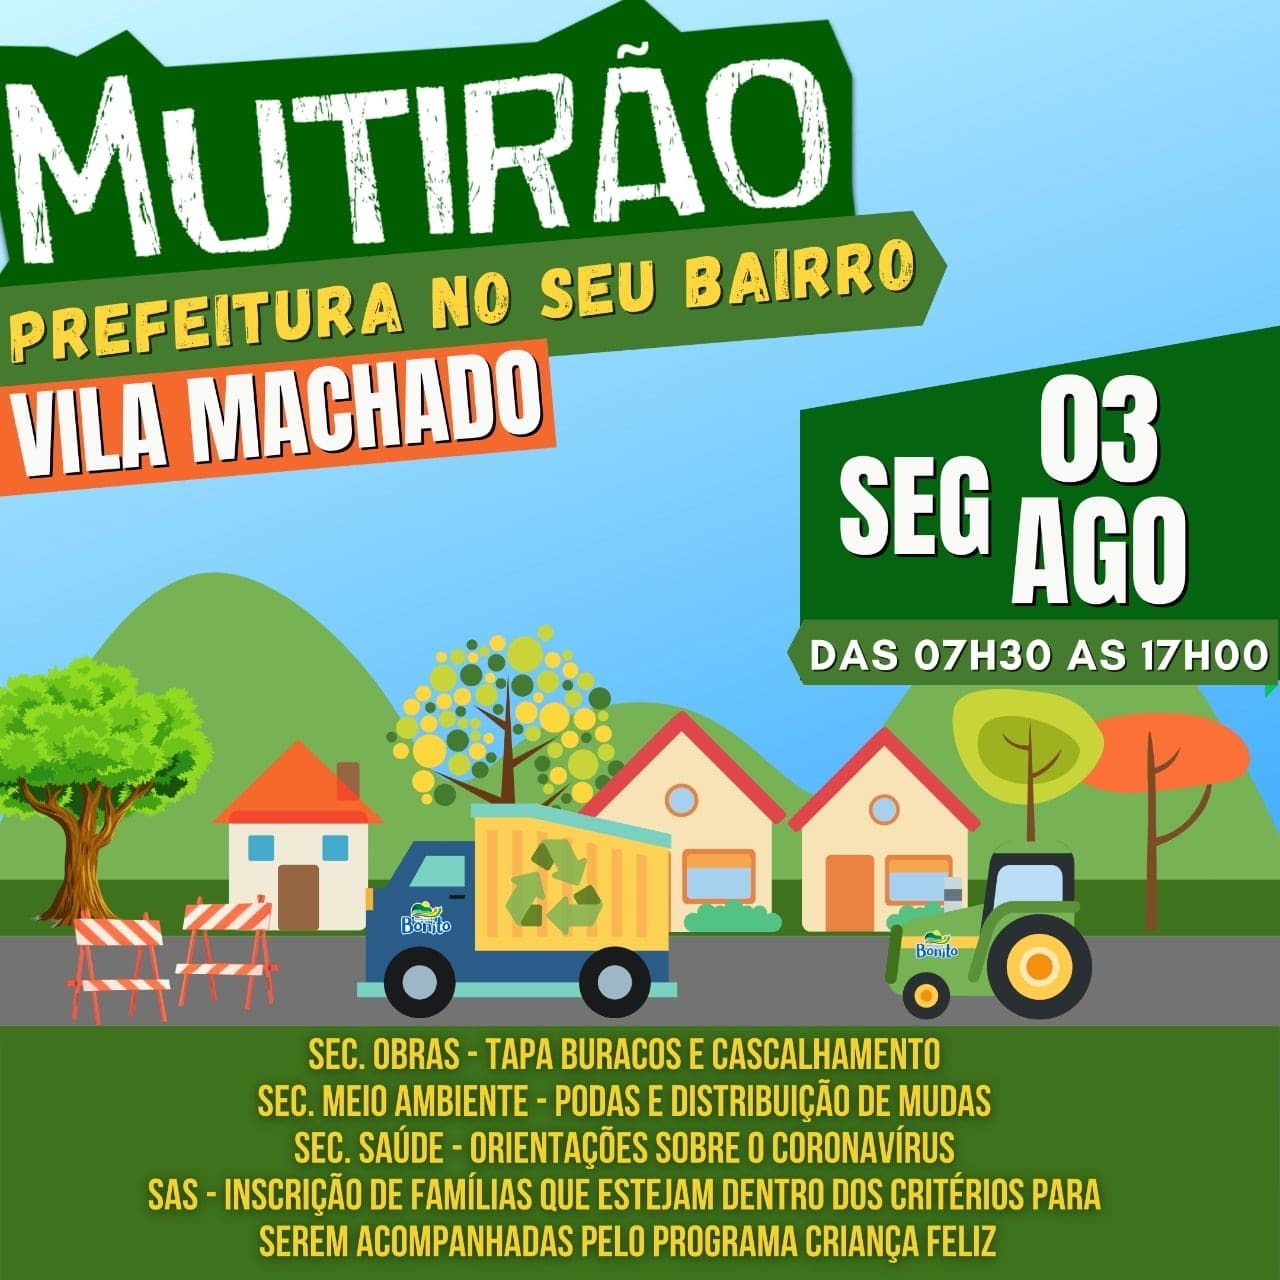 Prefeitura no seu bairro: Vila Machado recebe mutirão na segunda-feira